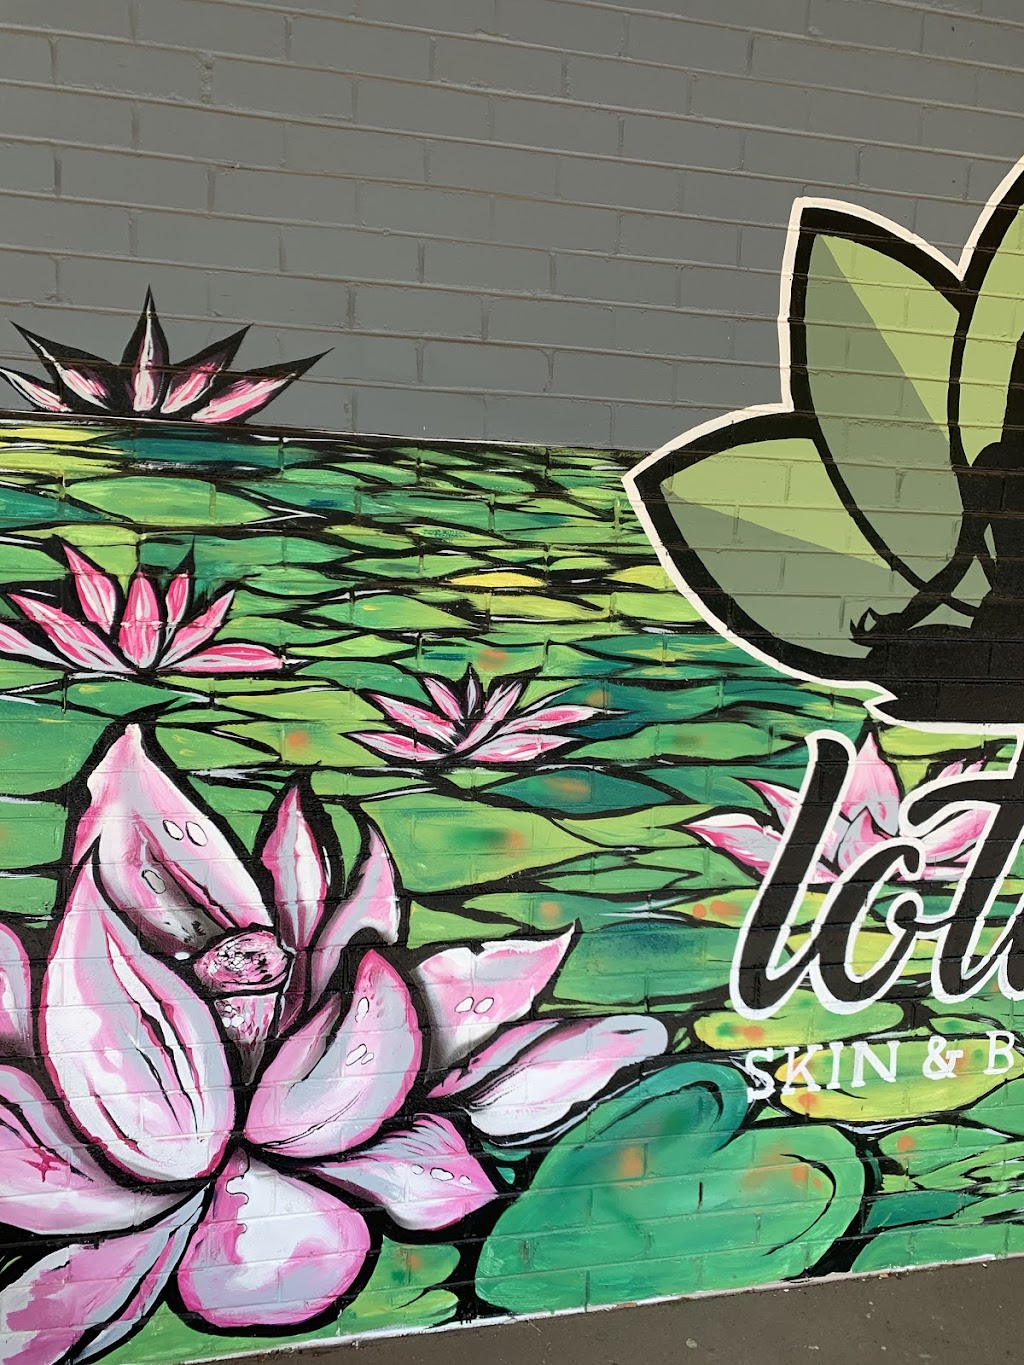 Lotus Skin and Beauty | 2/3 Carleton St, Kambah ACT 2902, Australia | Phone: (02) 6156 9633